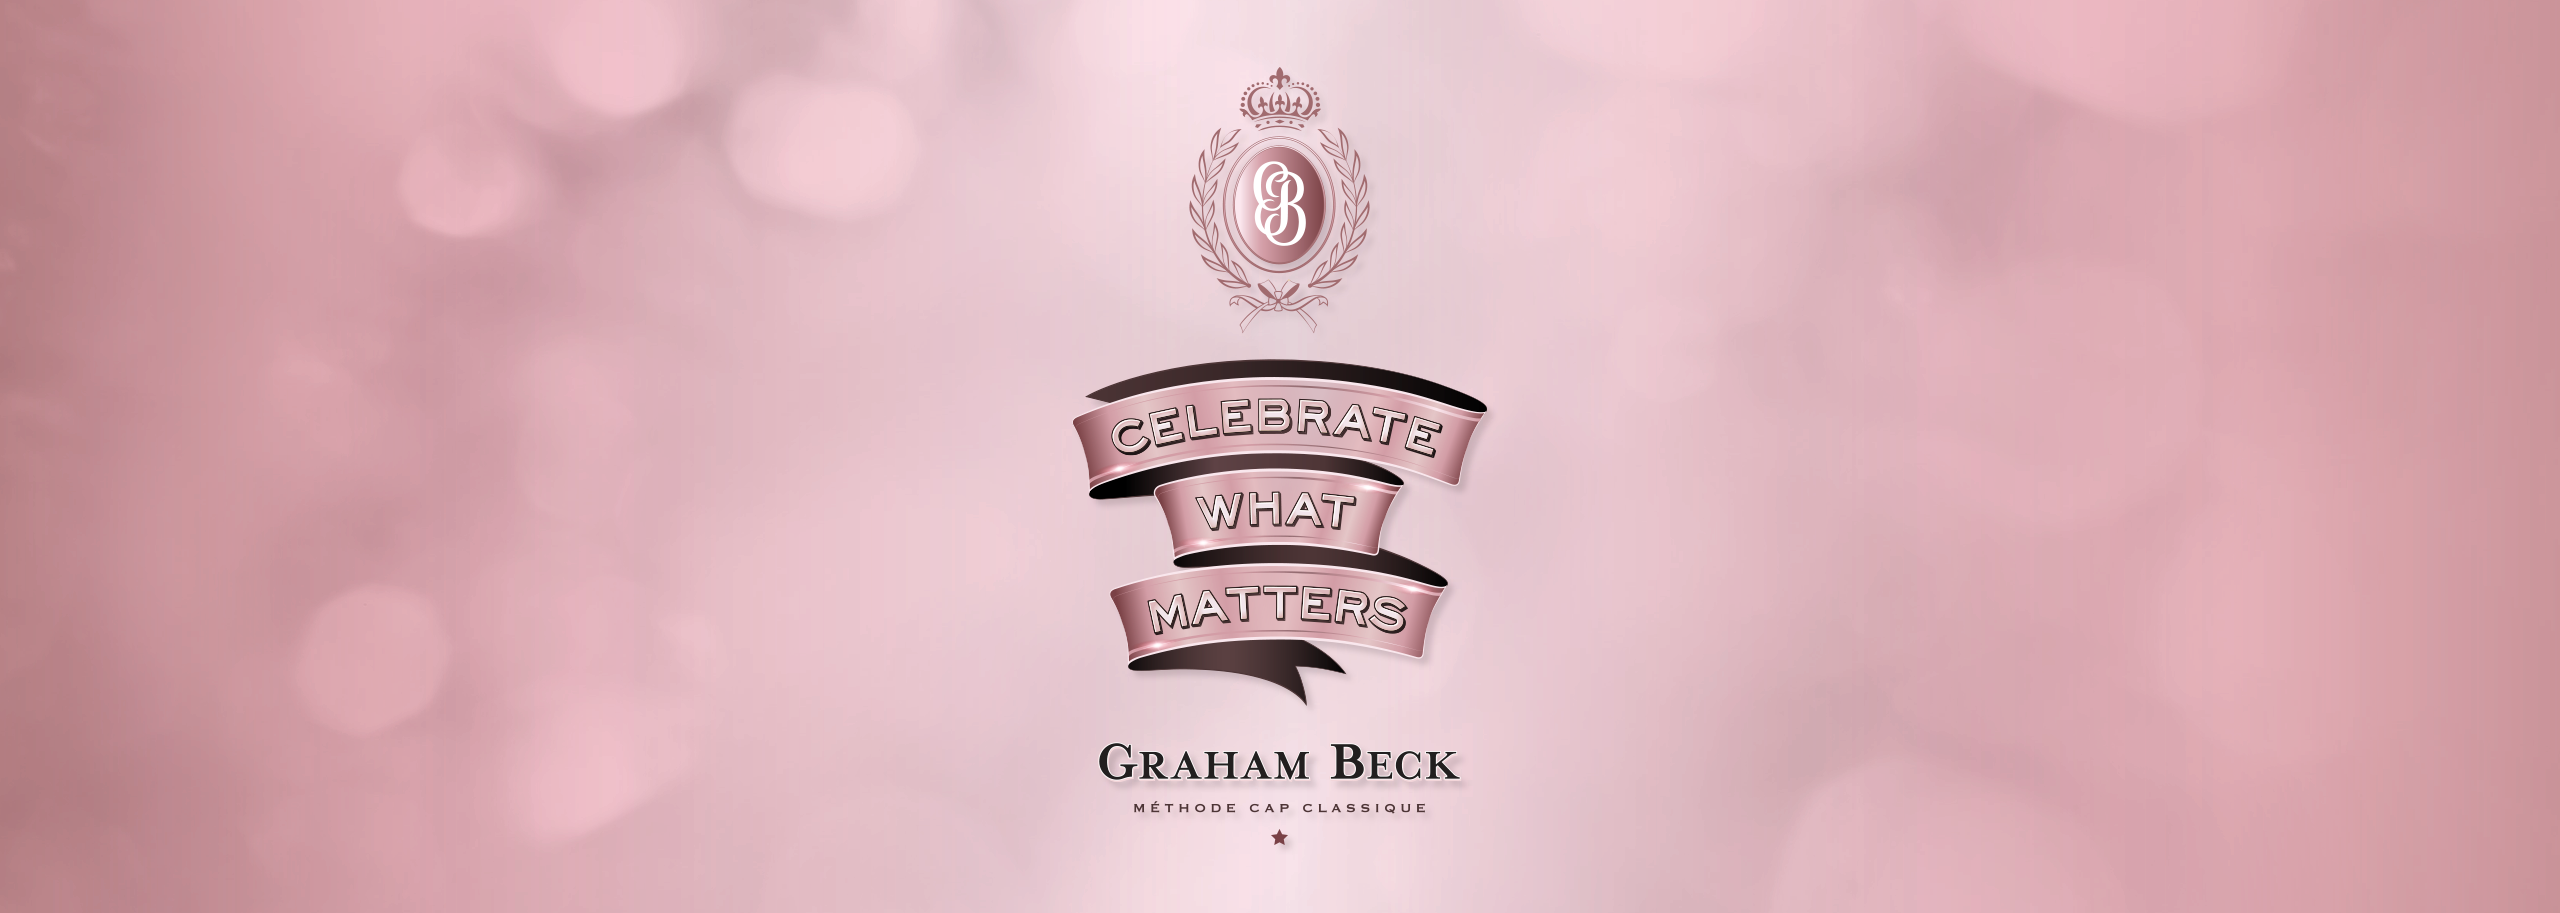 Graham Beck Celebrate What Matters-1